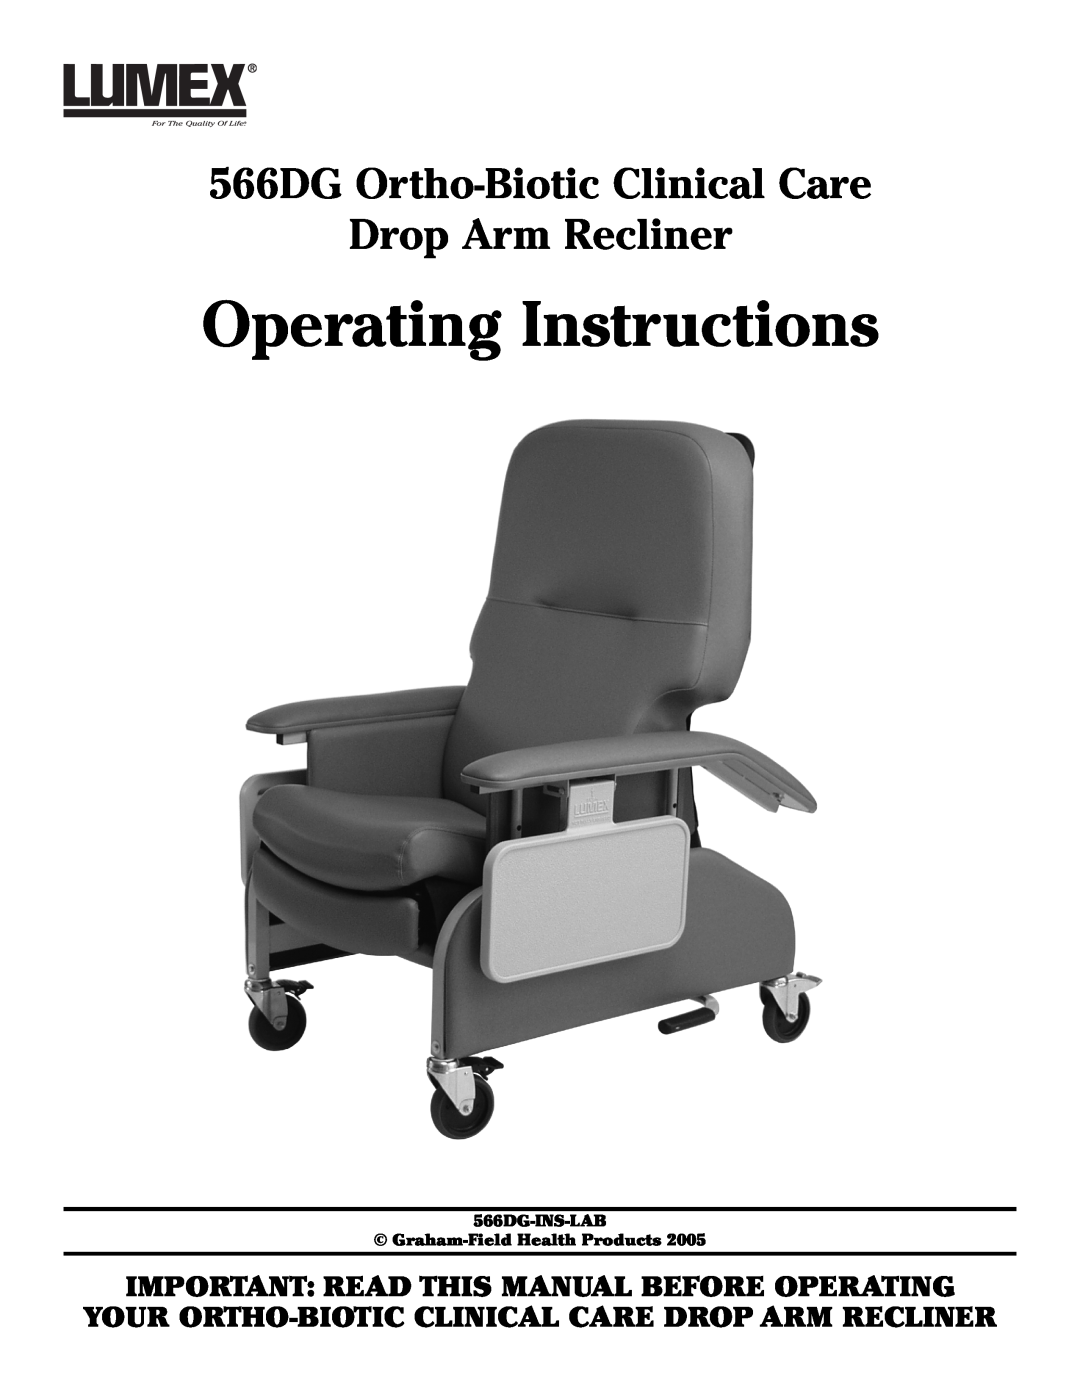 Lumex Syatems manual Operating Instructions, 566DG Ortho-BioticClinical Care Drop Arm Recliner 